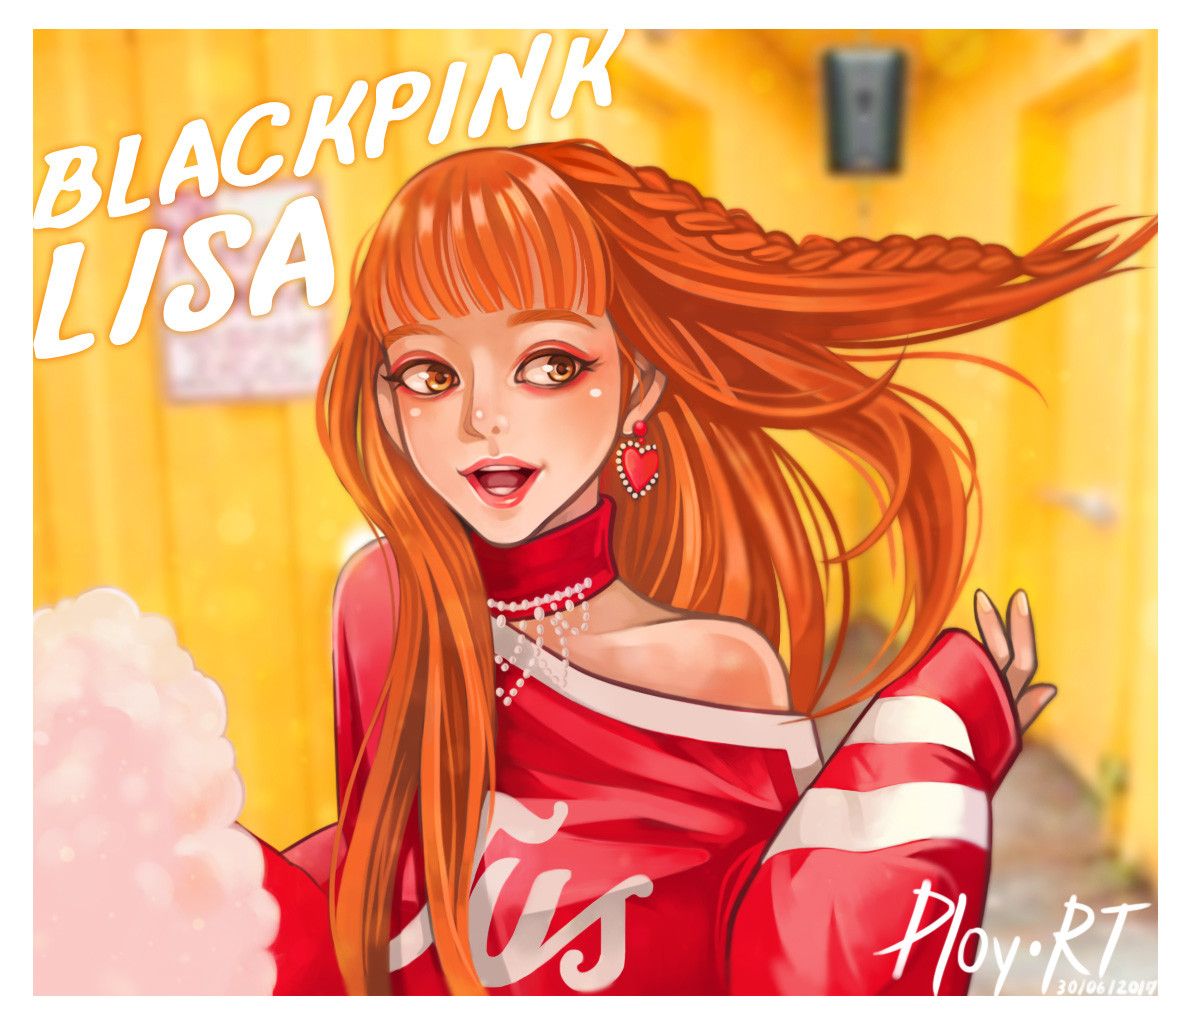 Lisa Blackpink Anime Drawing Wallpapers Wallpaper Cav - vrogue.co